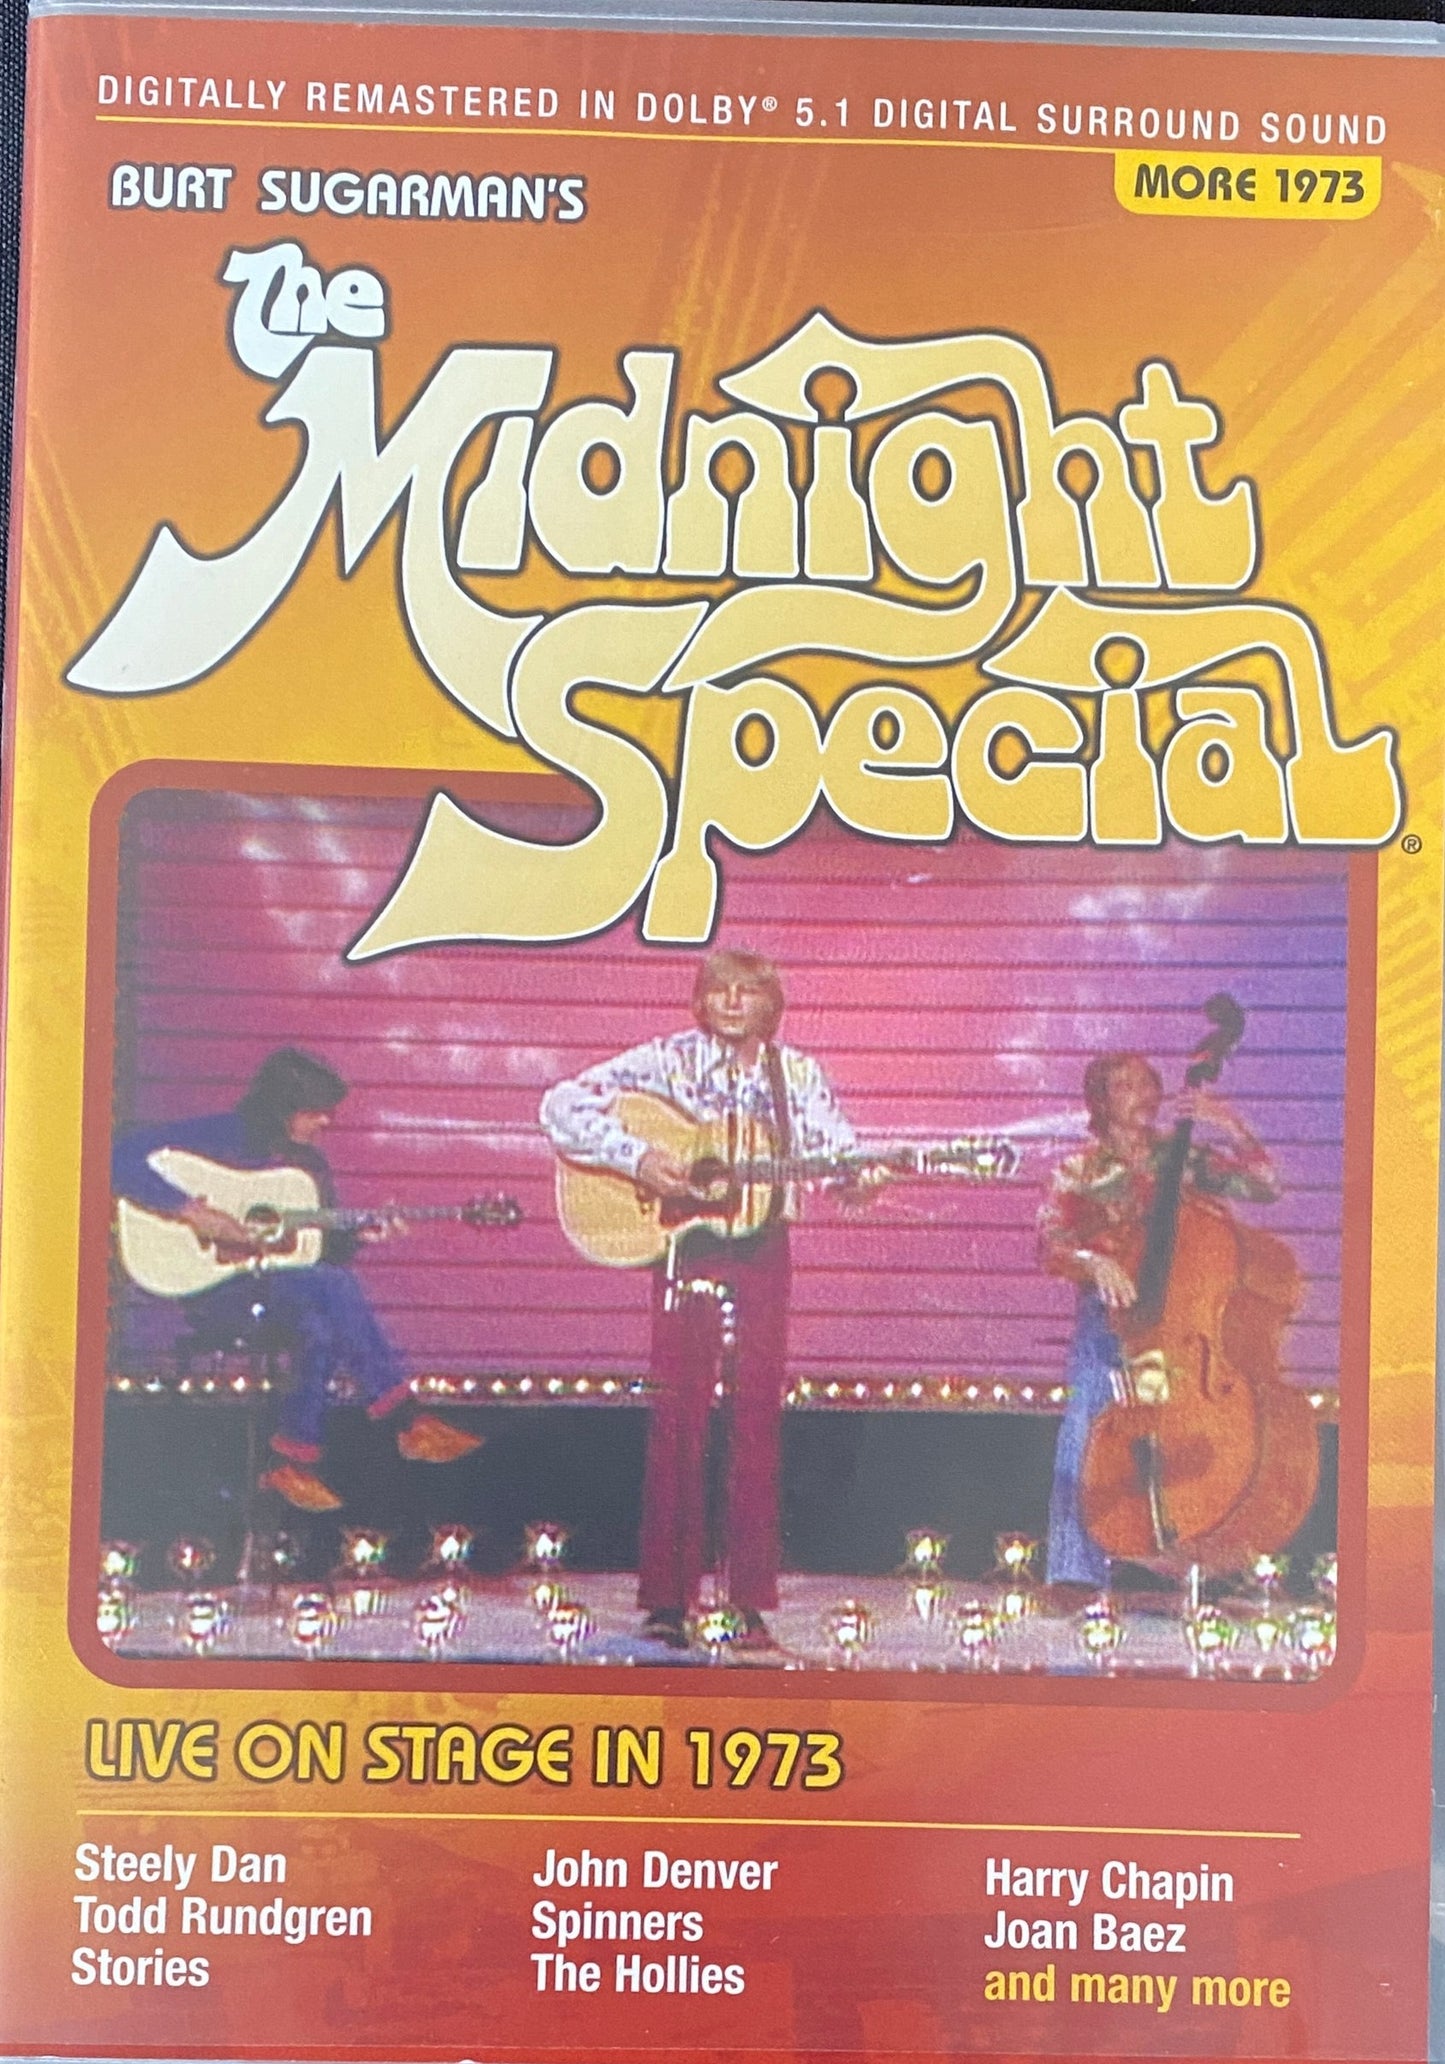 Burt Sugarman's The Midnight Special Live - More 1973